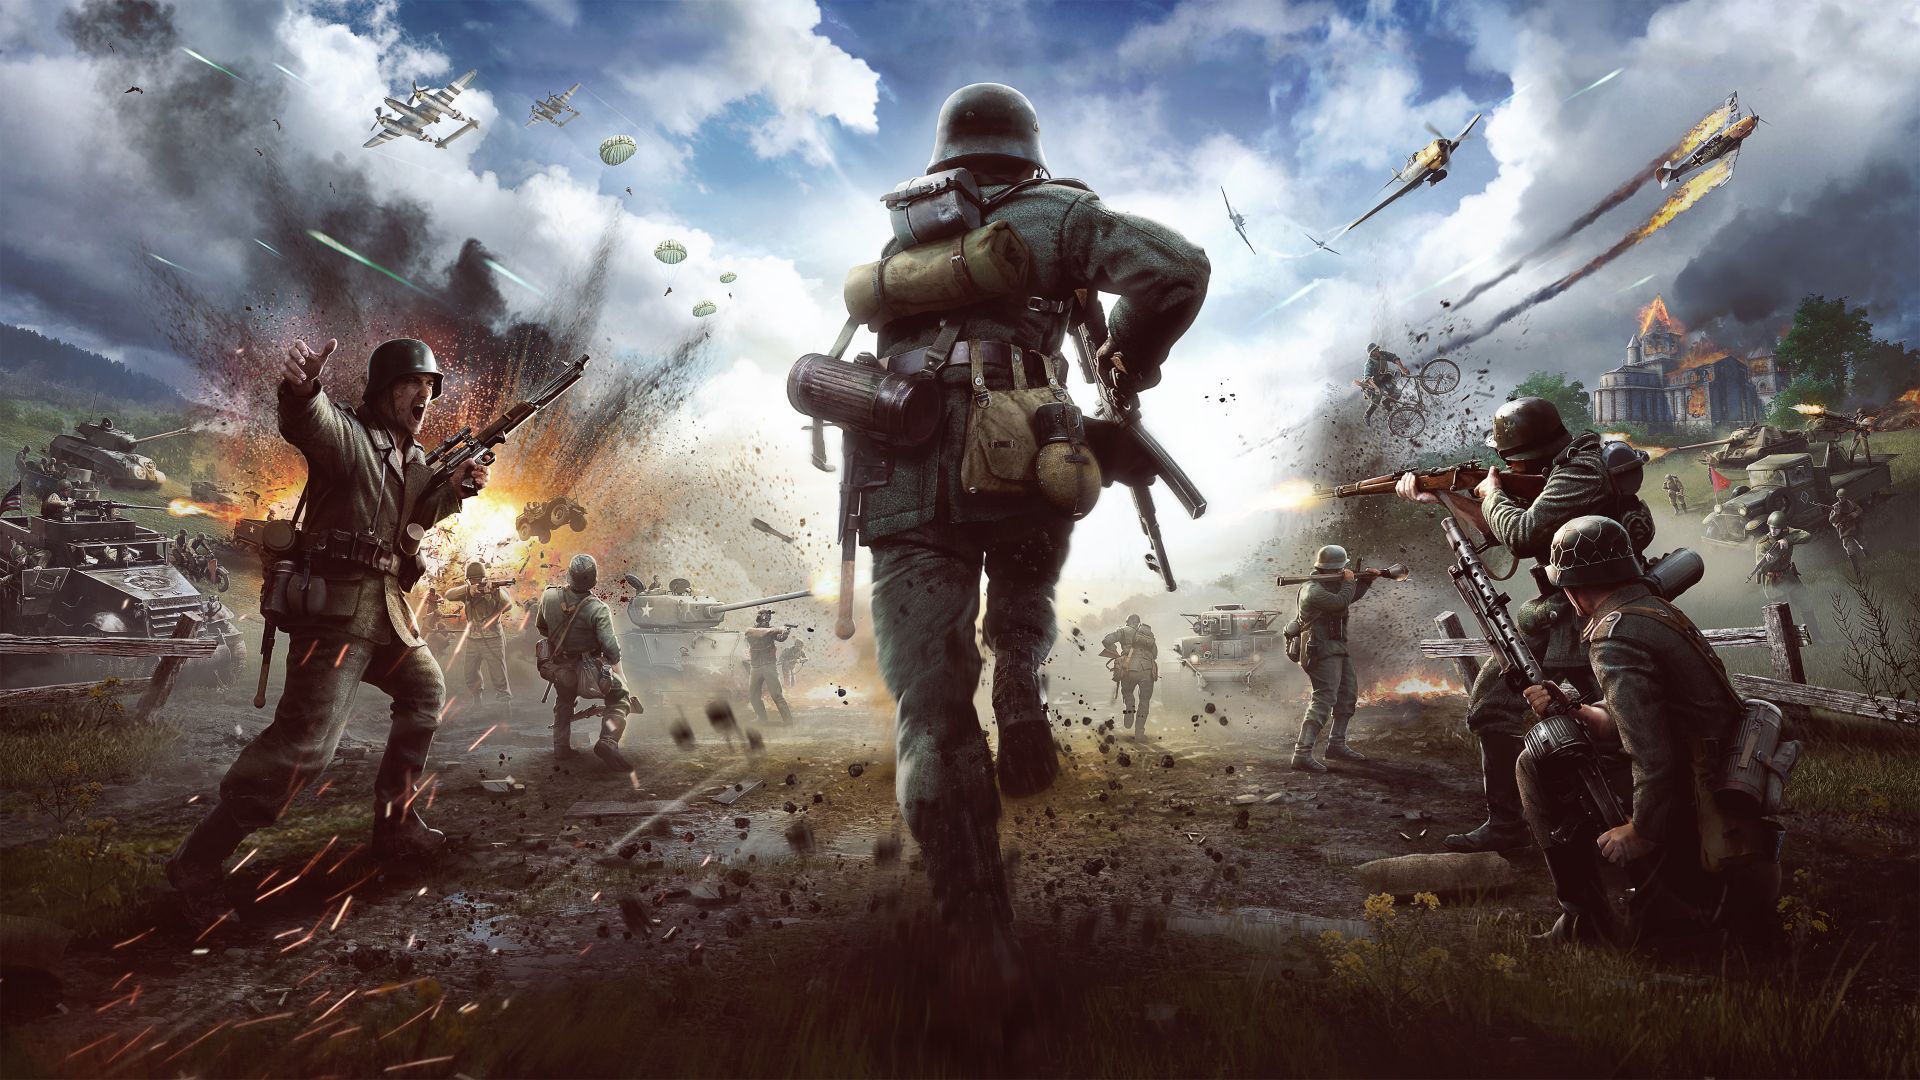 Desktop wallpaper heroes & generals, soldier, battle ground, HD image, picture, background, dec31c